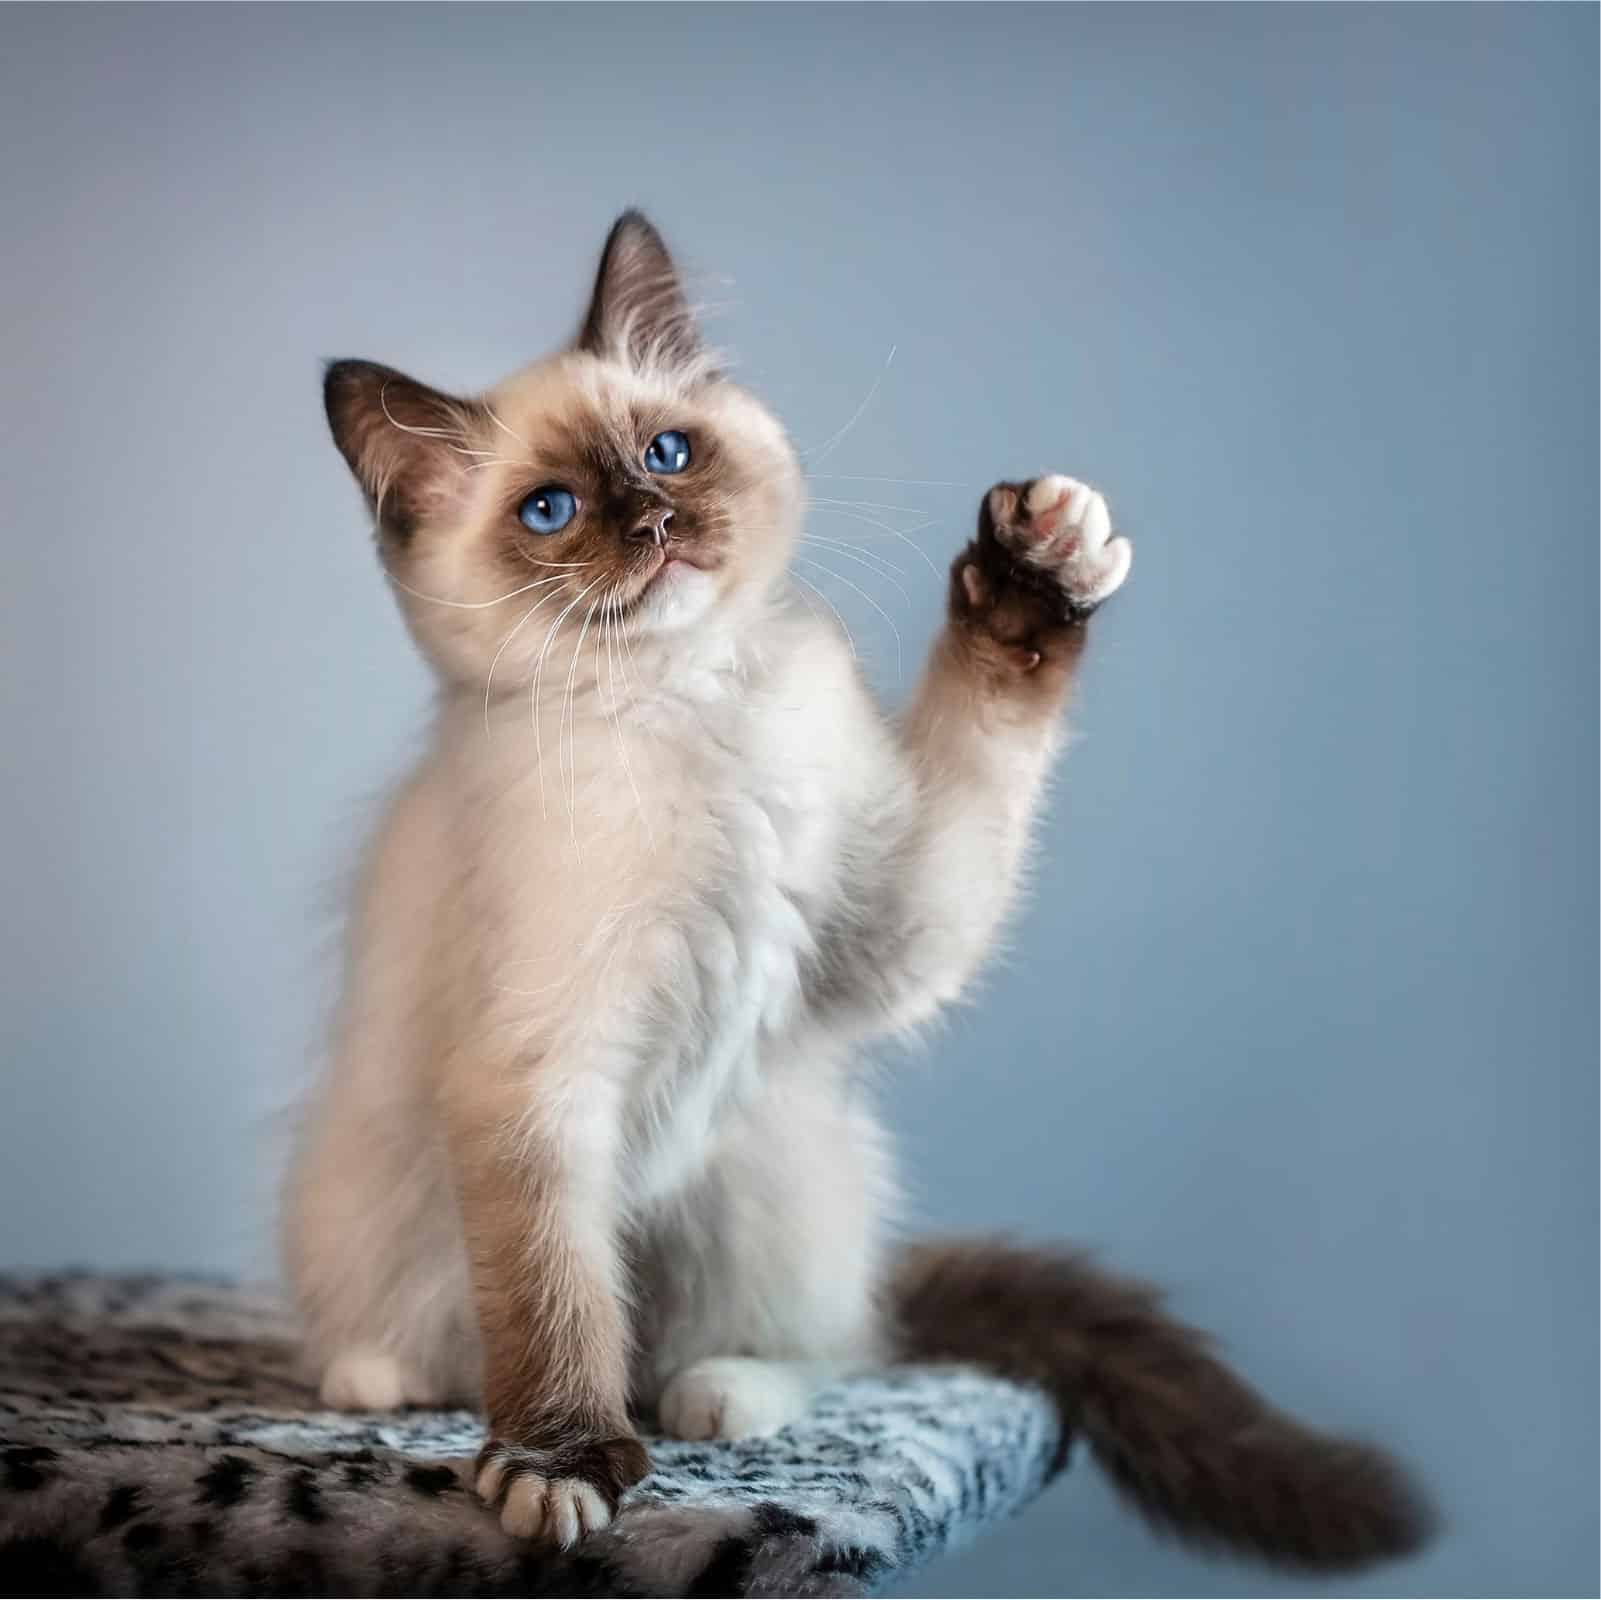 How long do Siamese cats live?